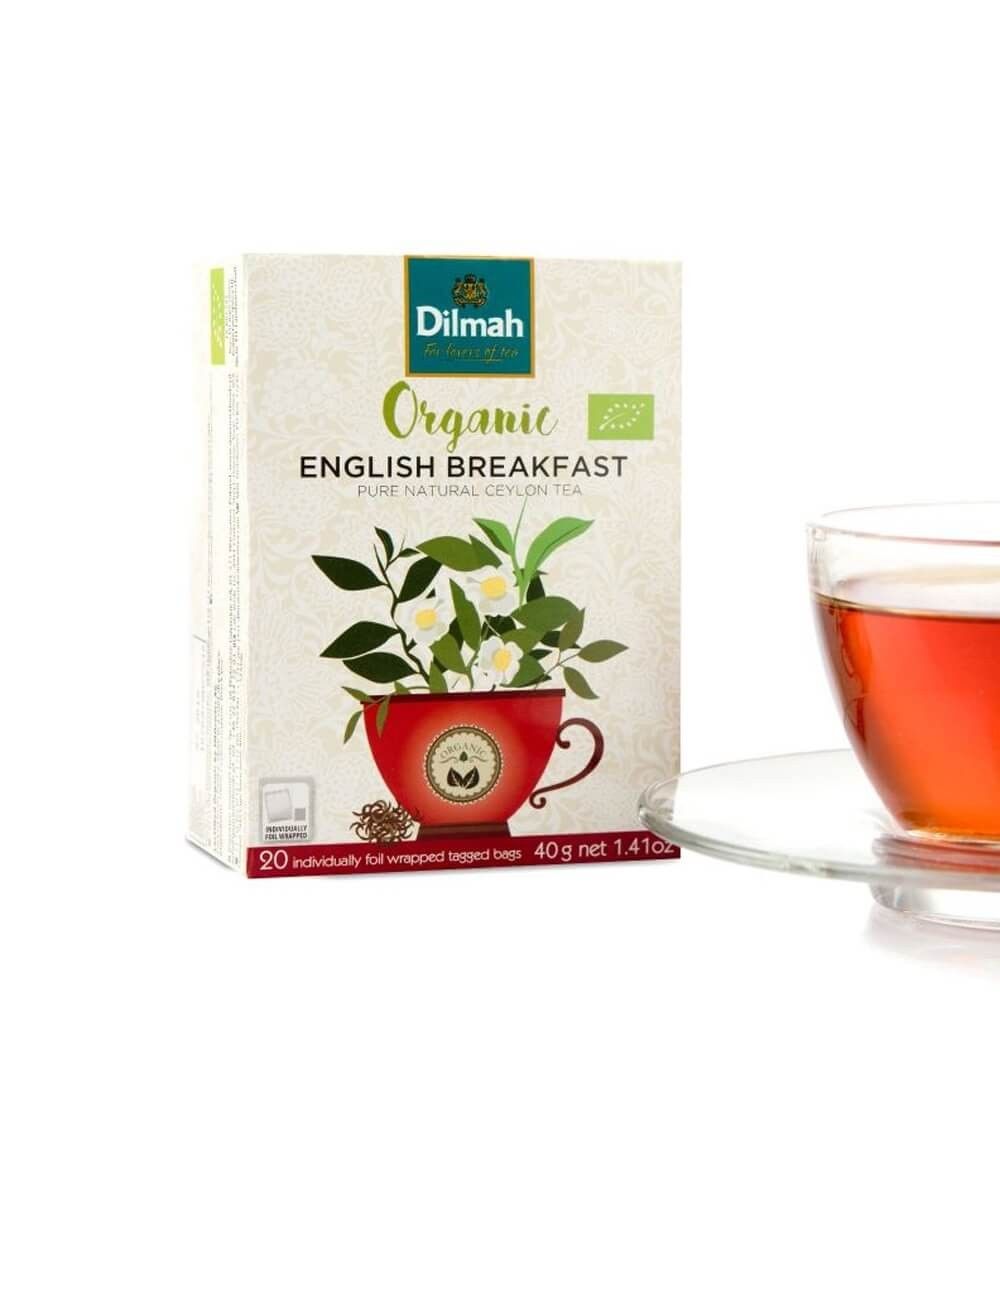 Dilmah Organic English Breakfast Black Tea 20 sachets